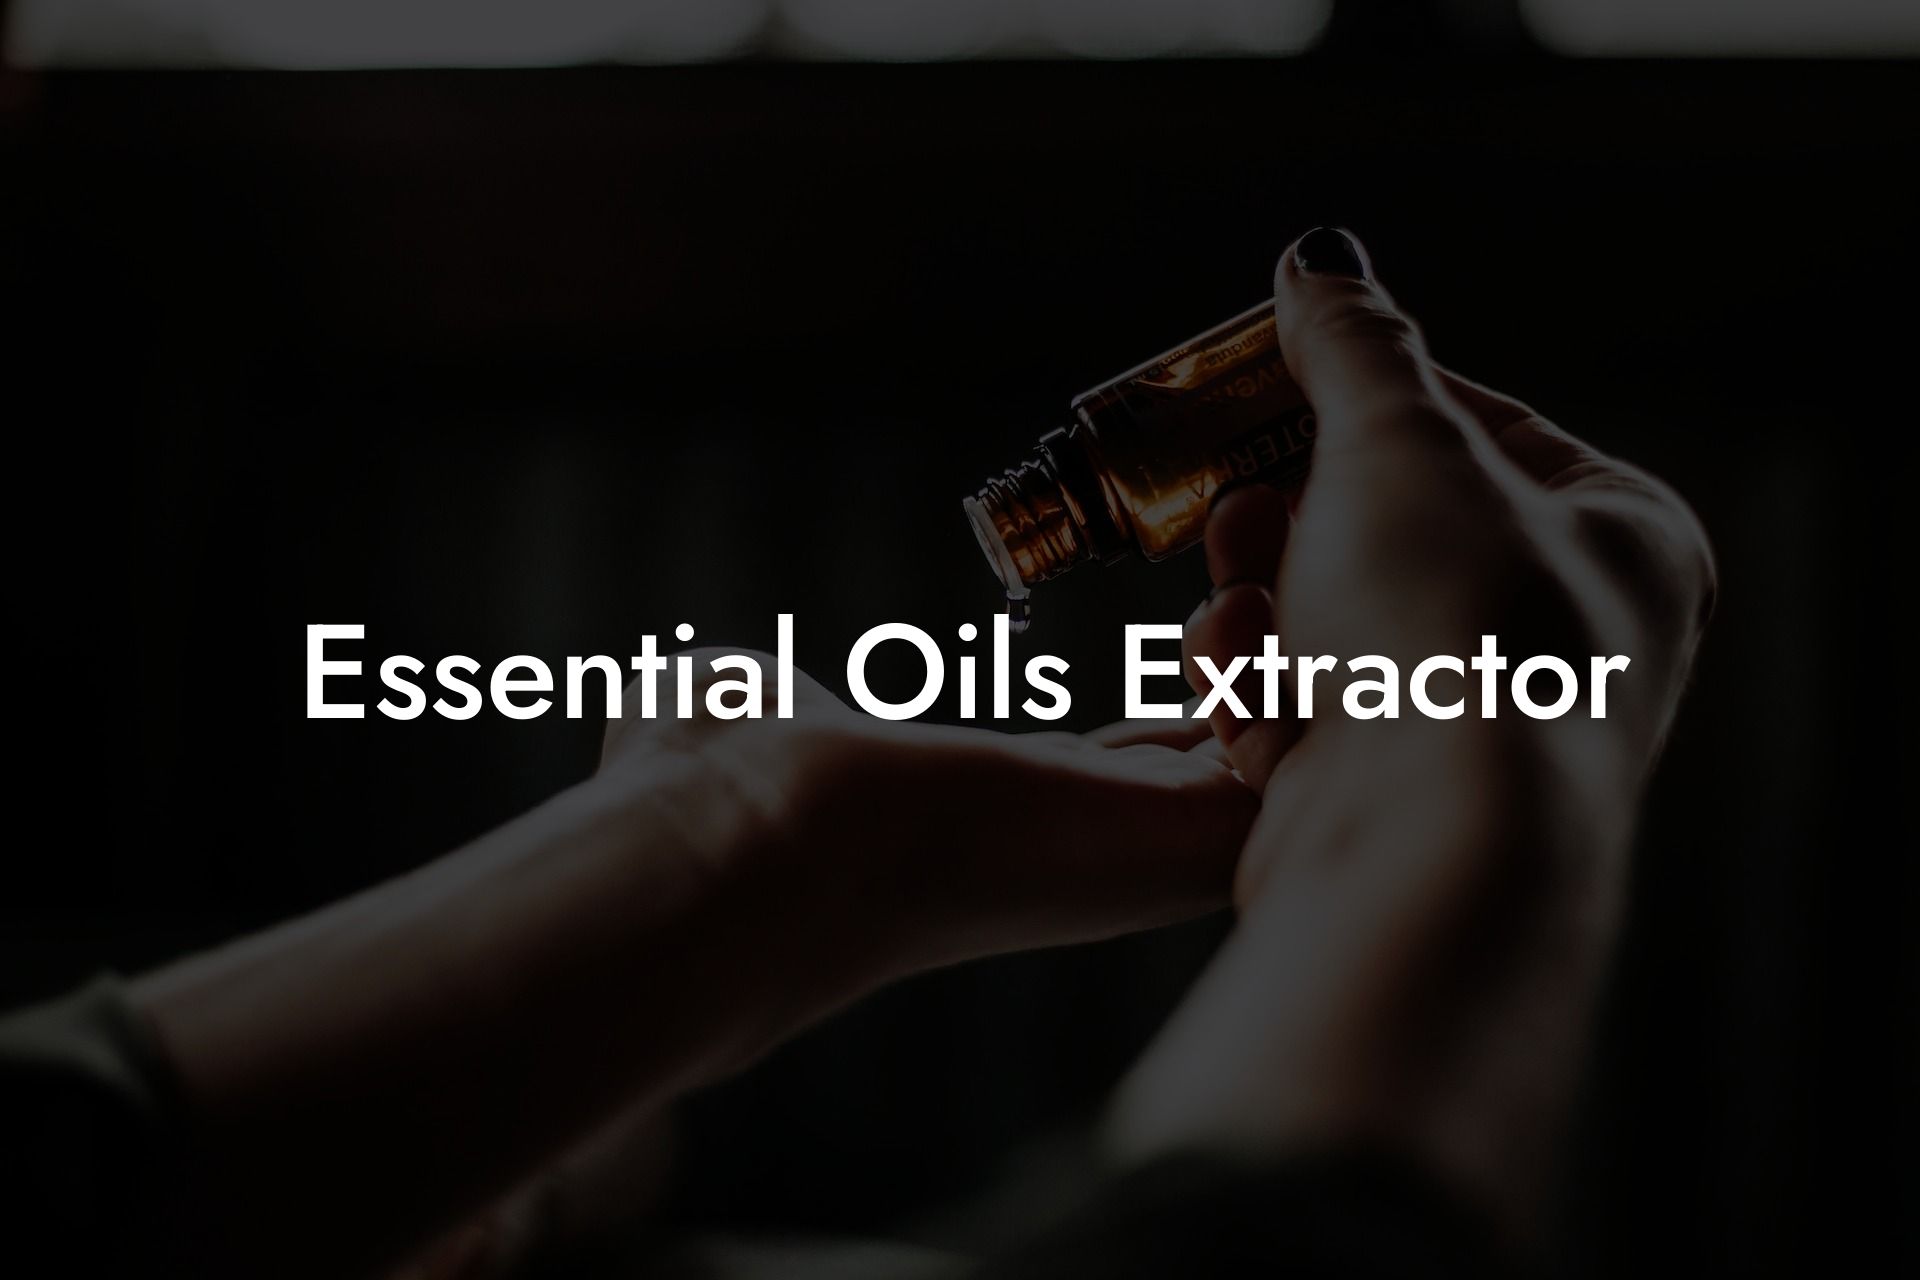 Essential Oils Extractor